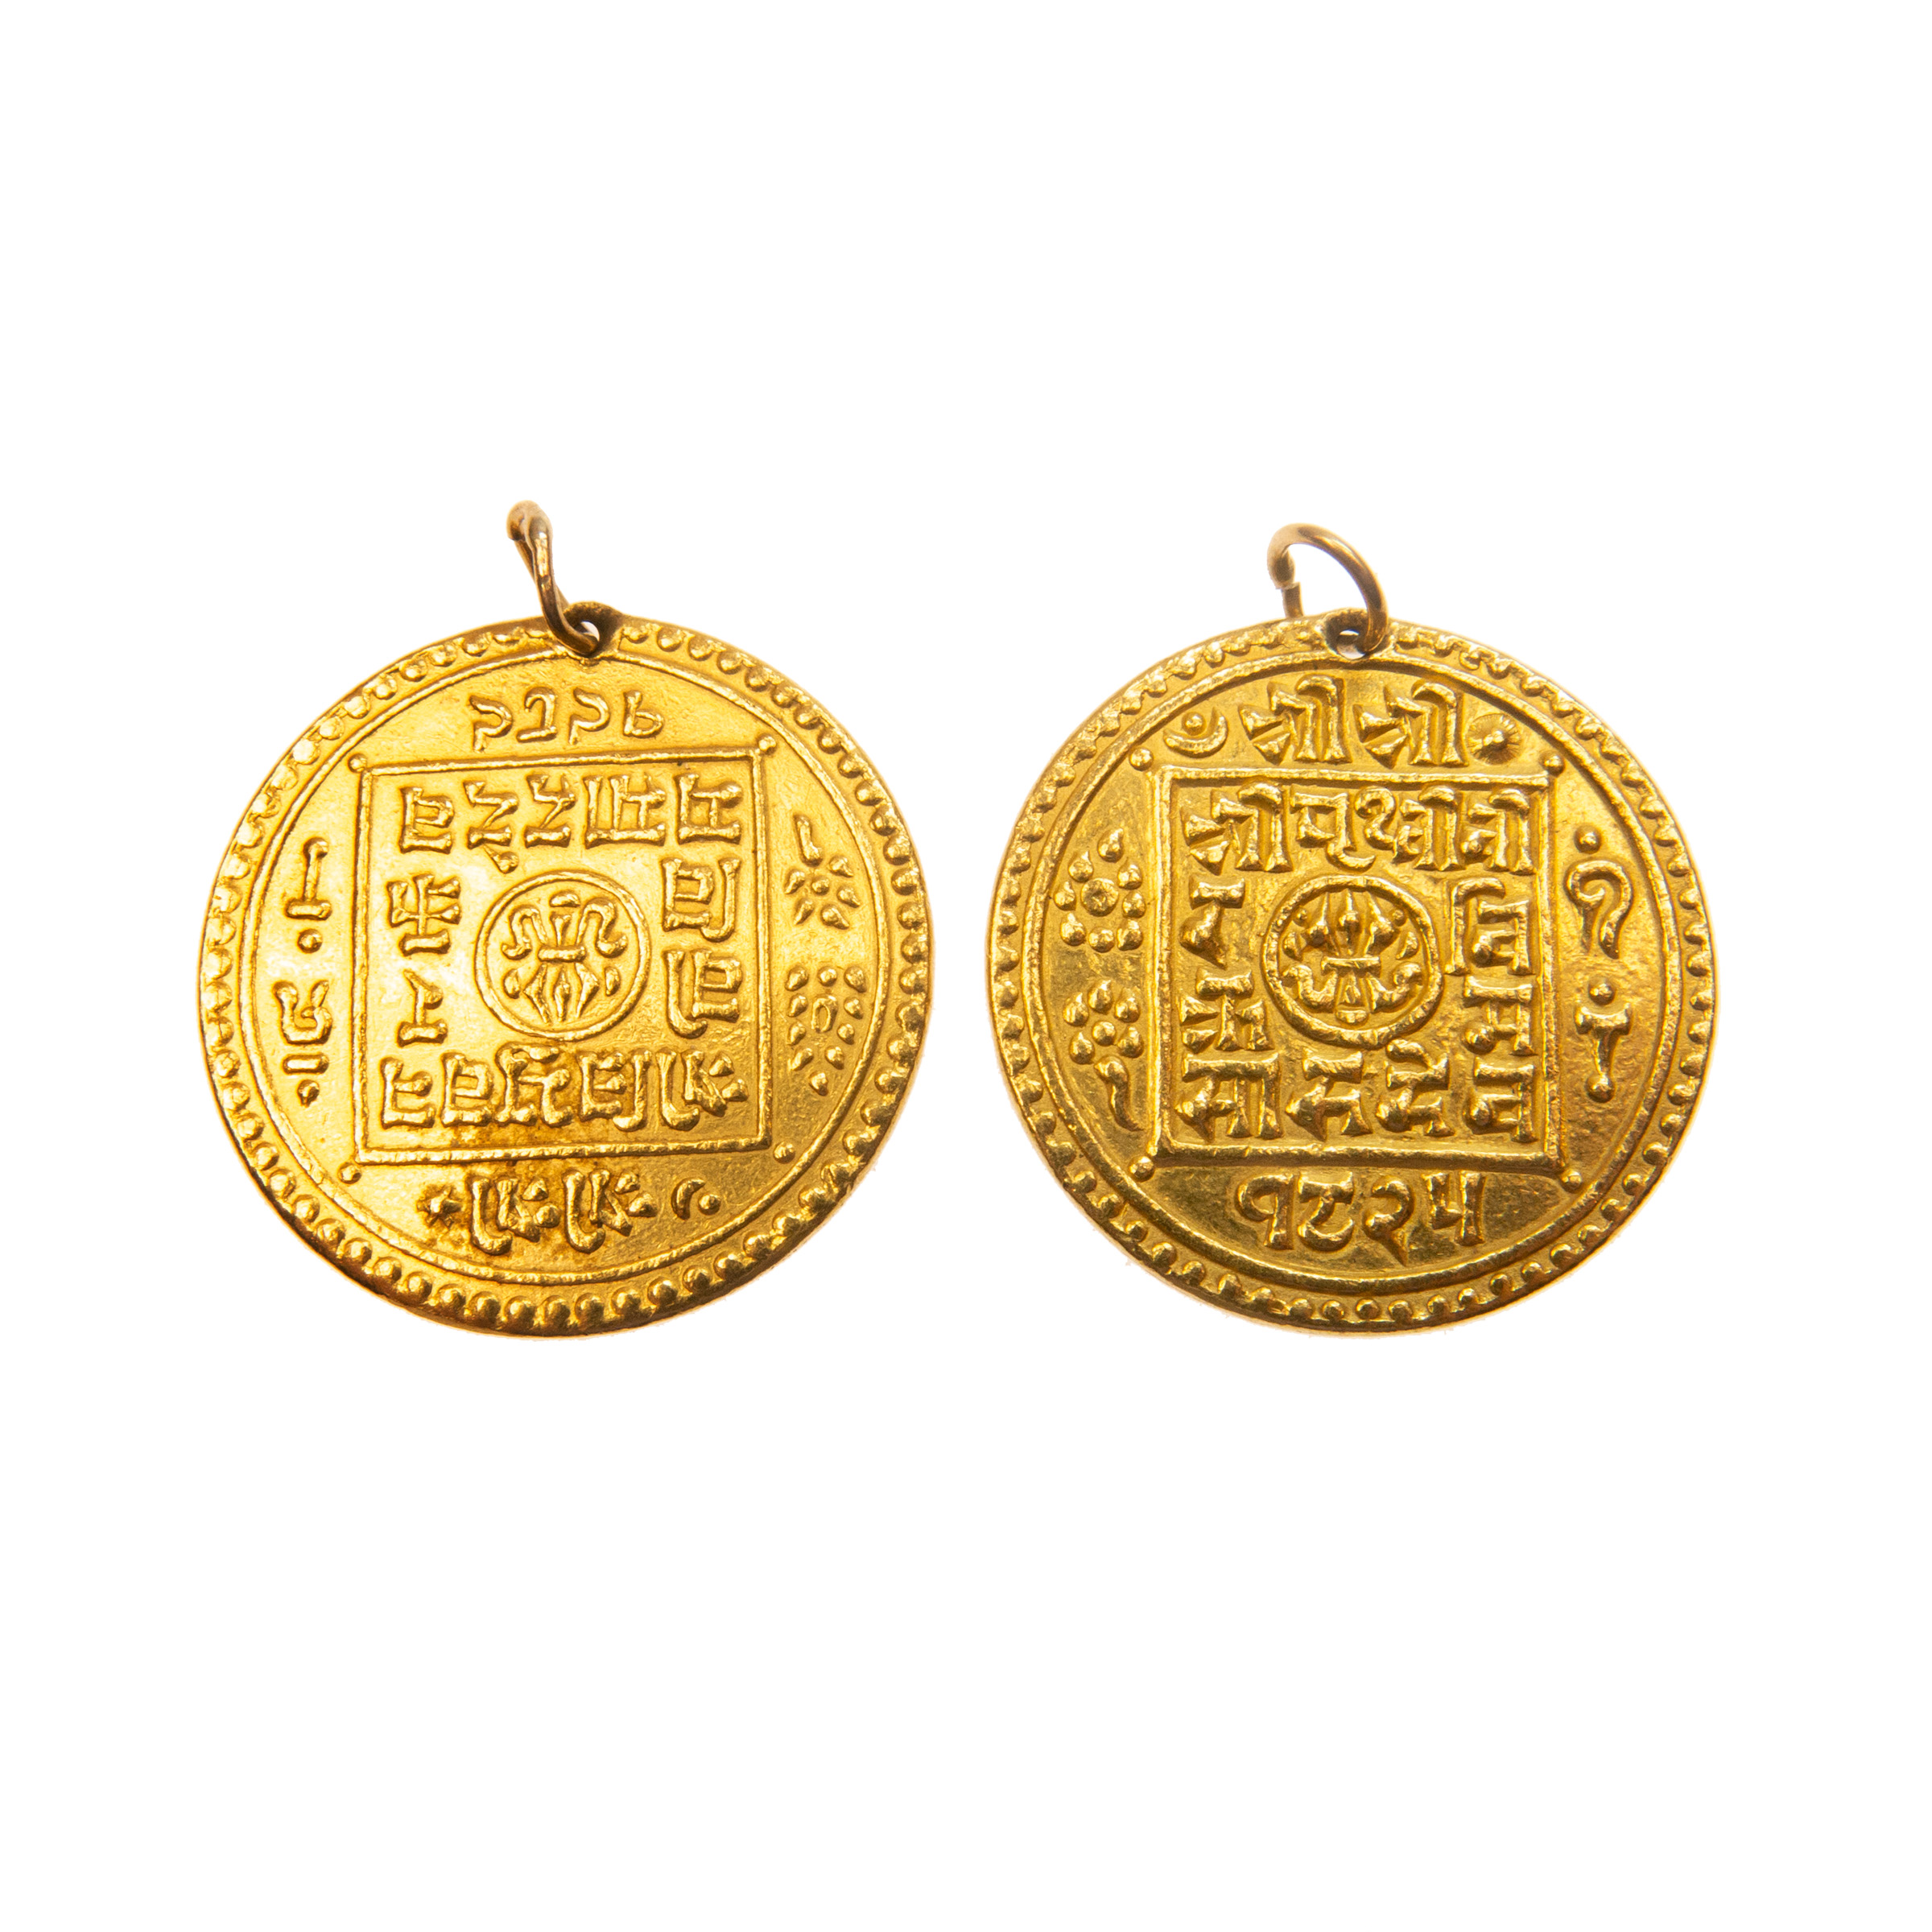 2 X 22K Yellow Gold Arabic Coins